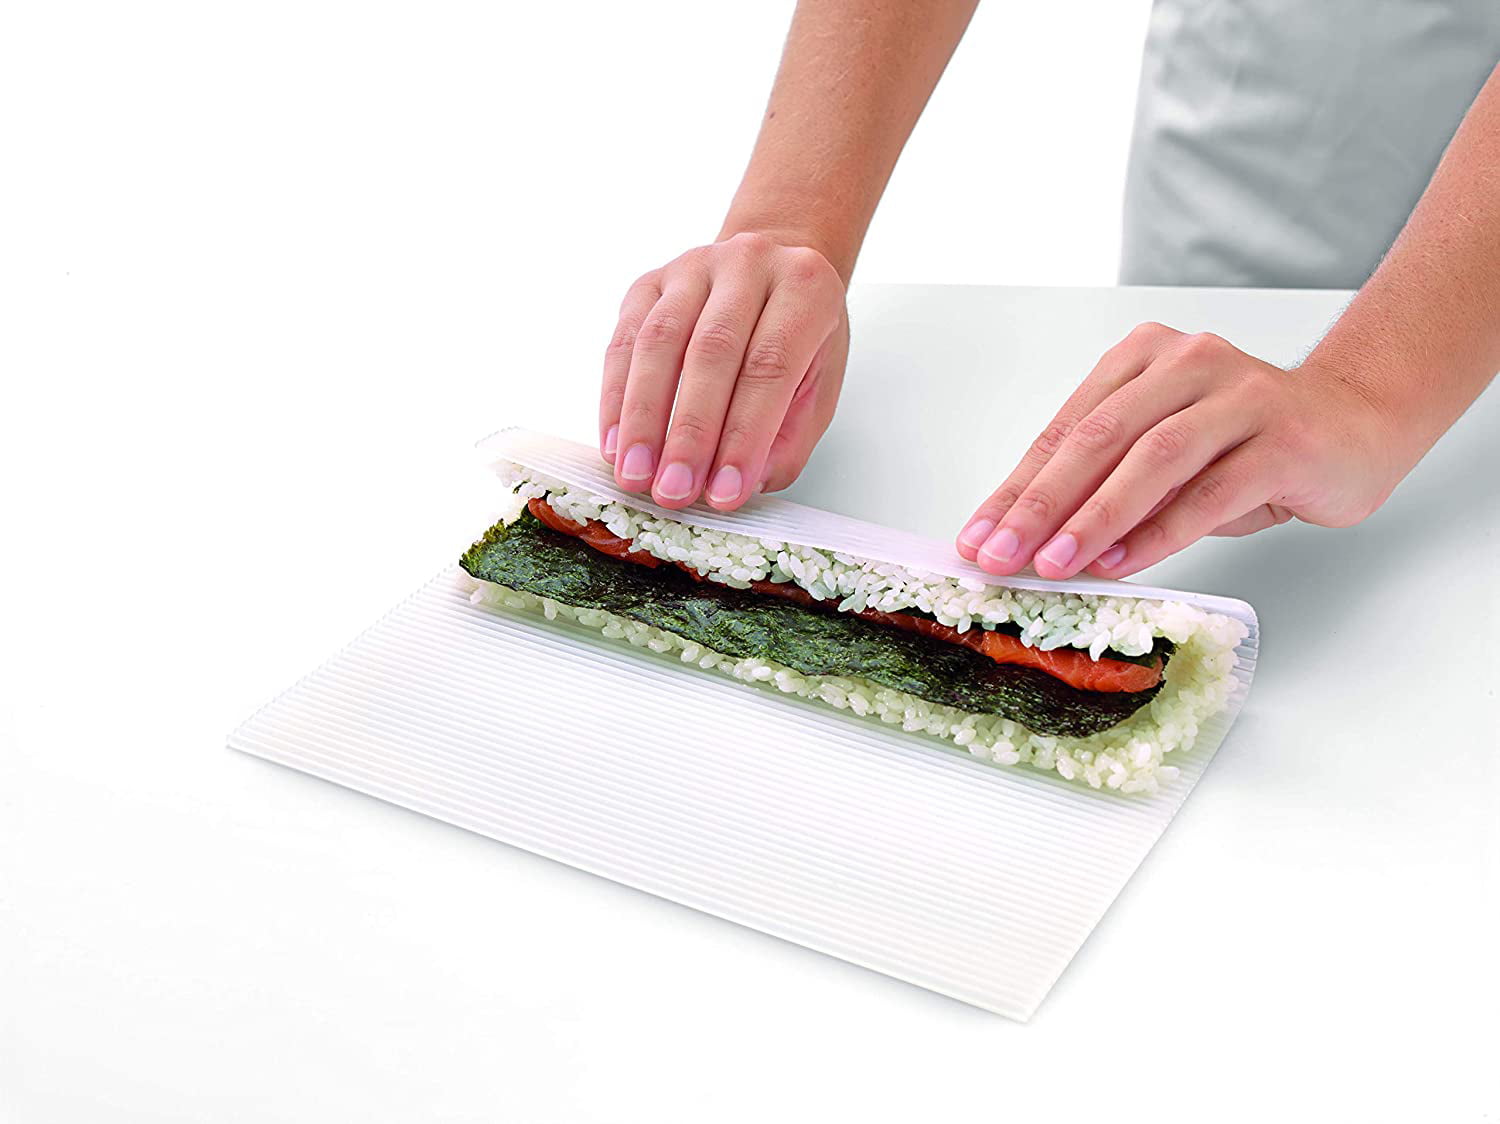 choxila Sushi Making Kit, Silicone Sushi Mat